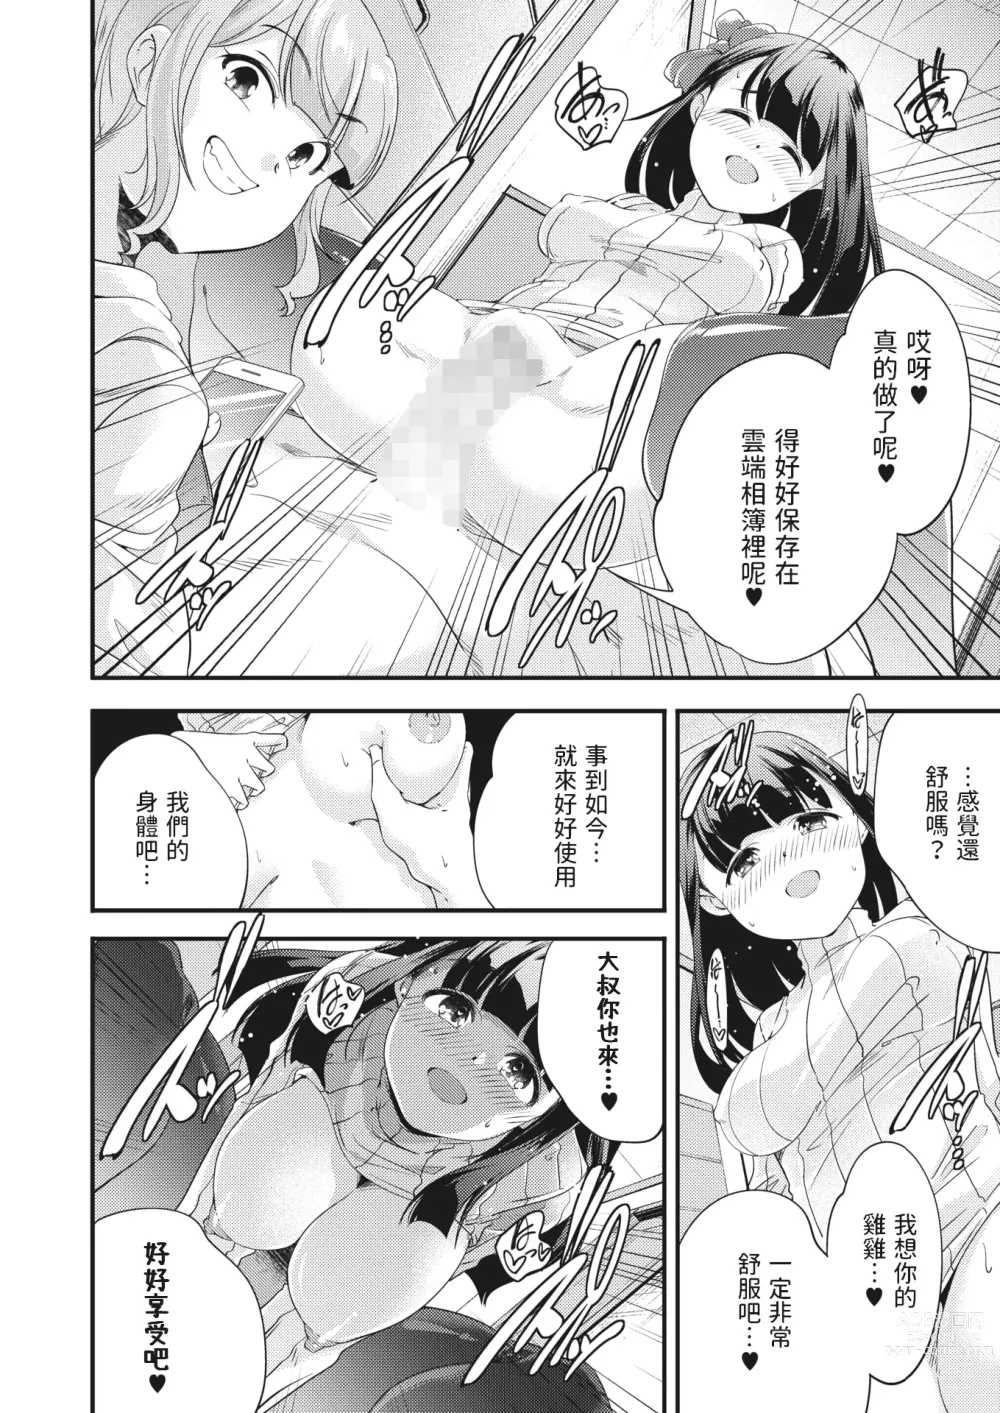 Page 10 of manga Ariadone